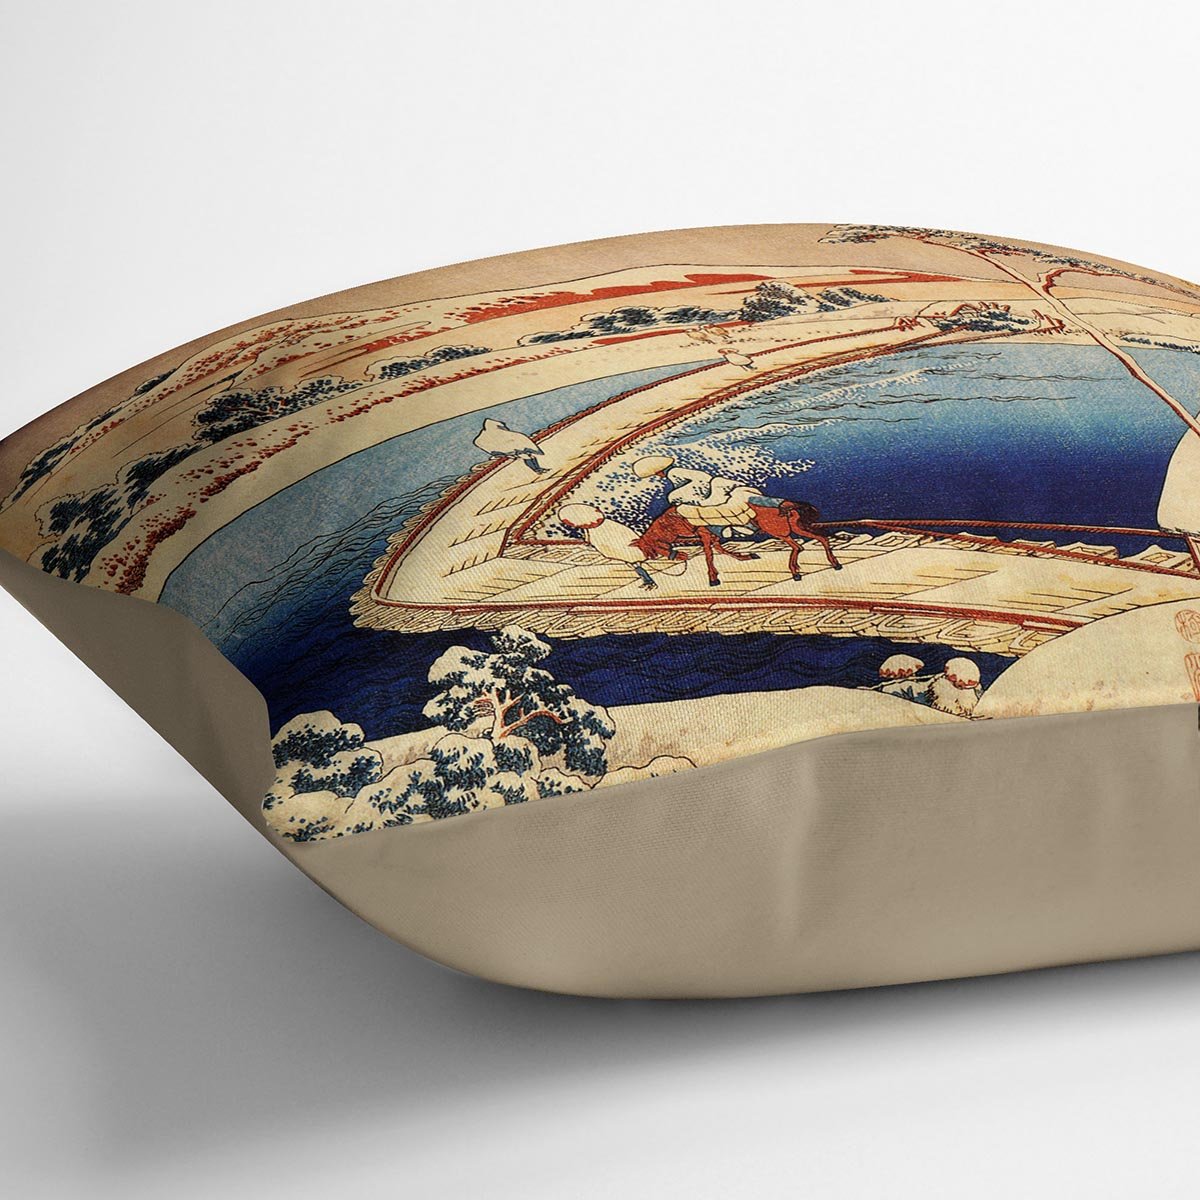 The swimming bridge of Sano by Hokusai Throw Pillow